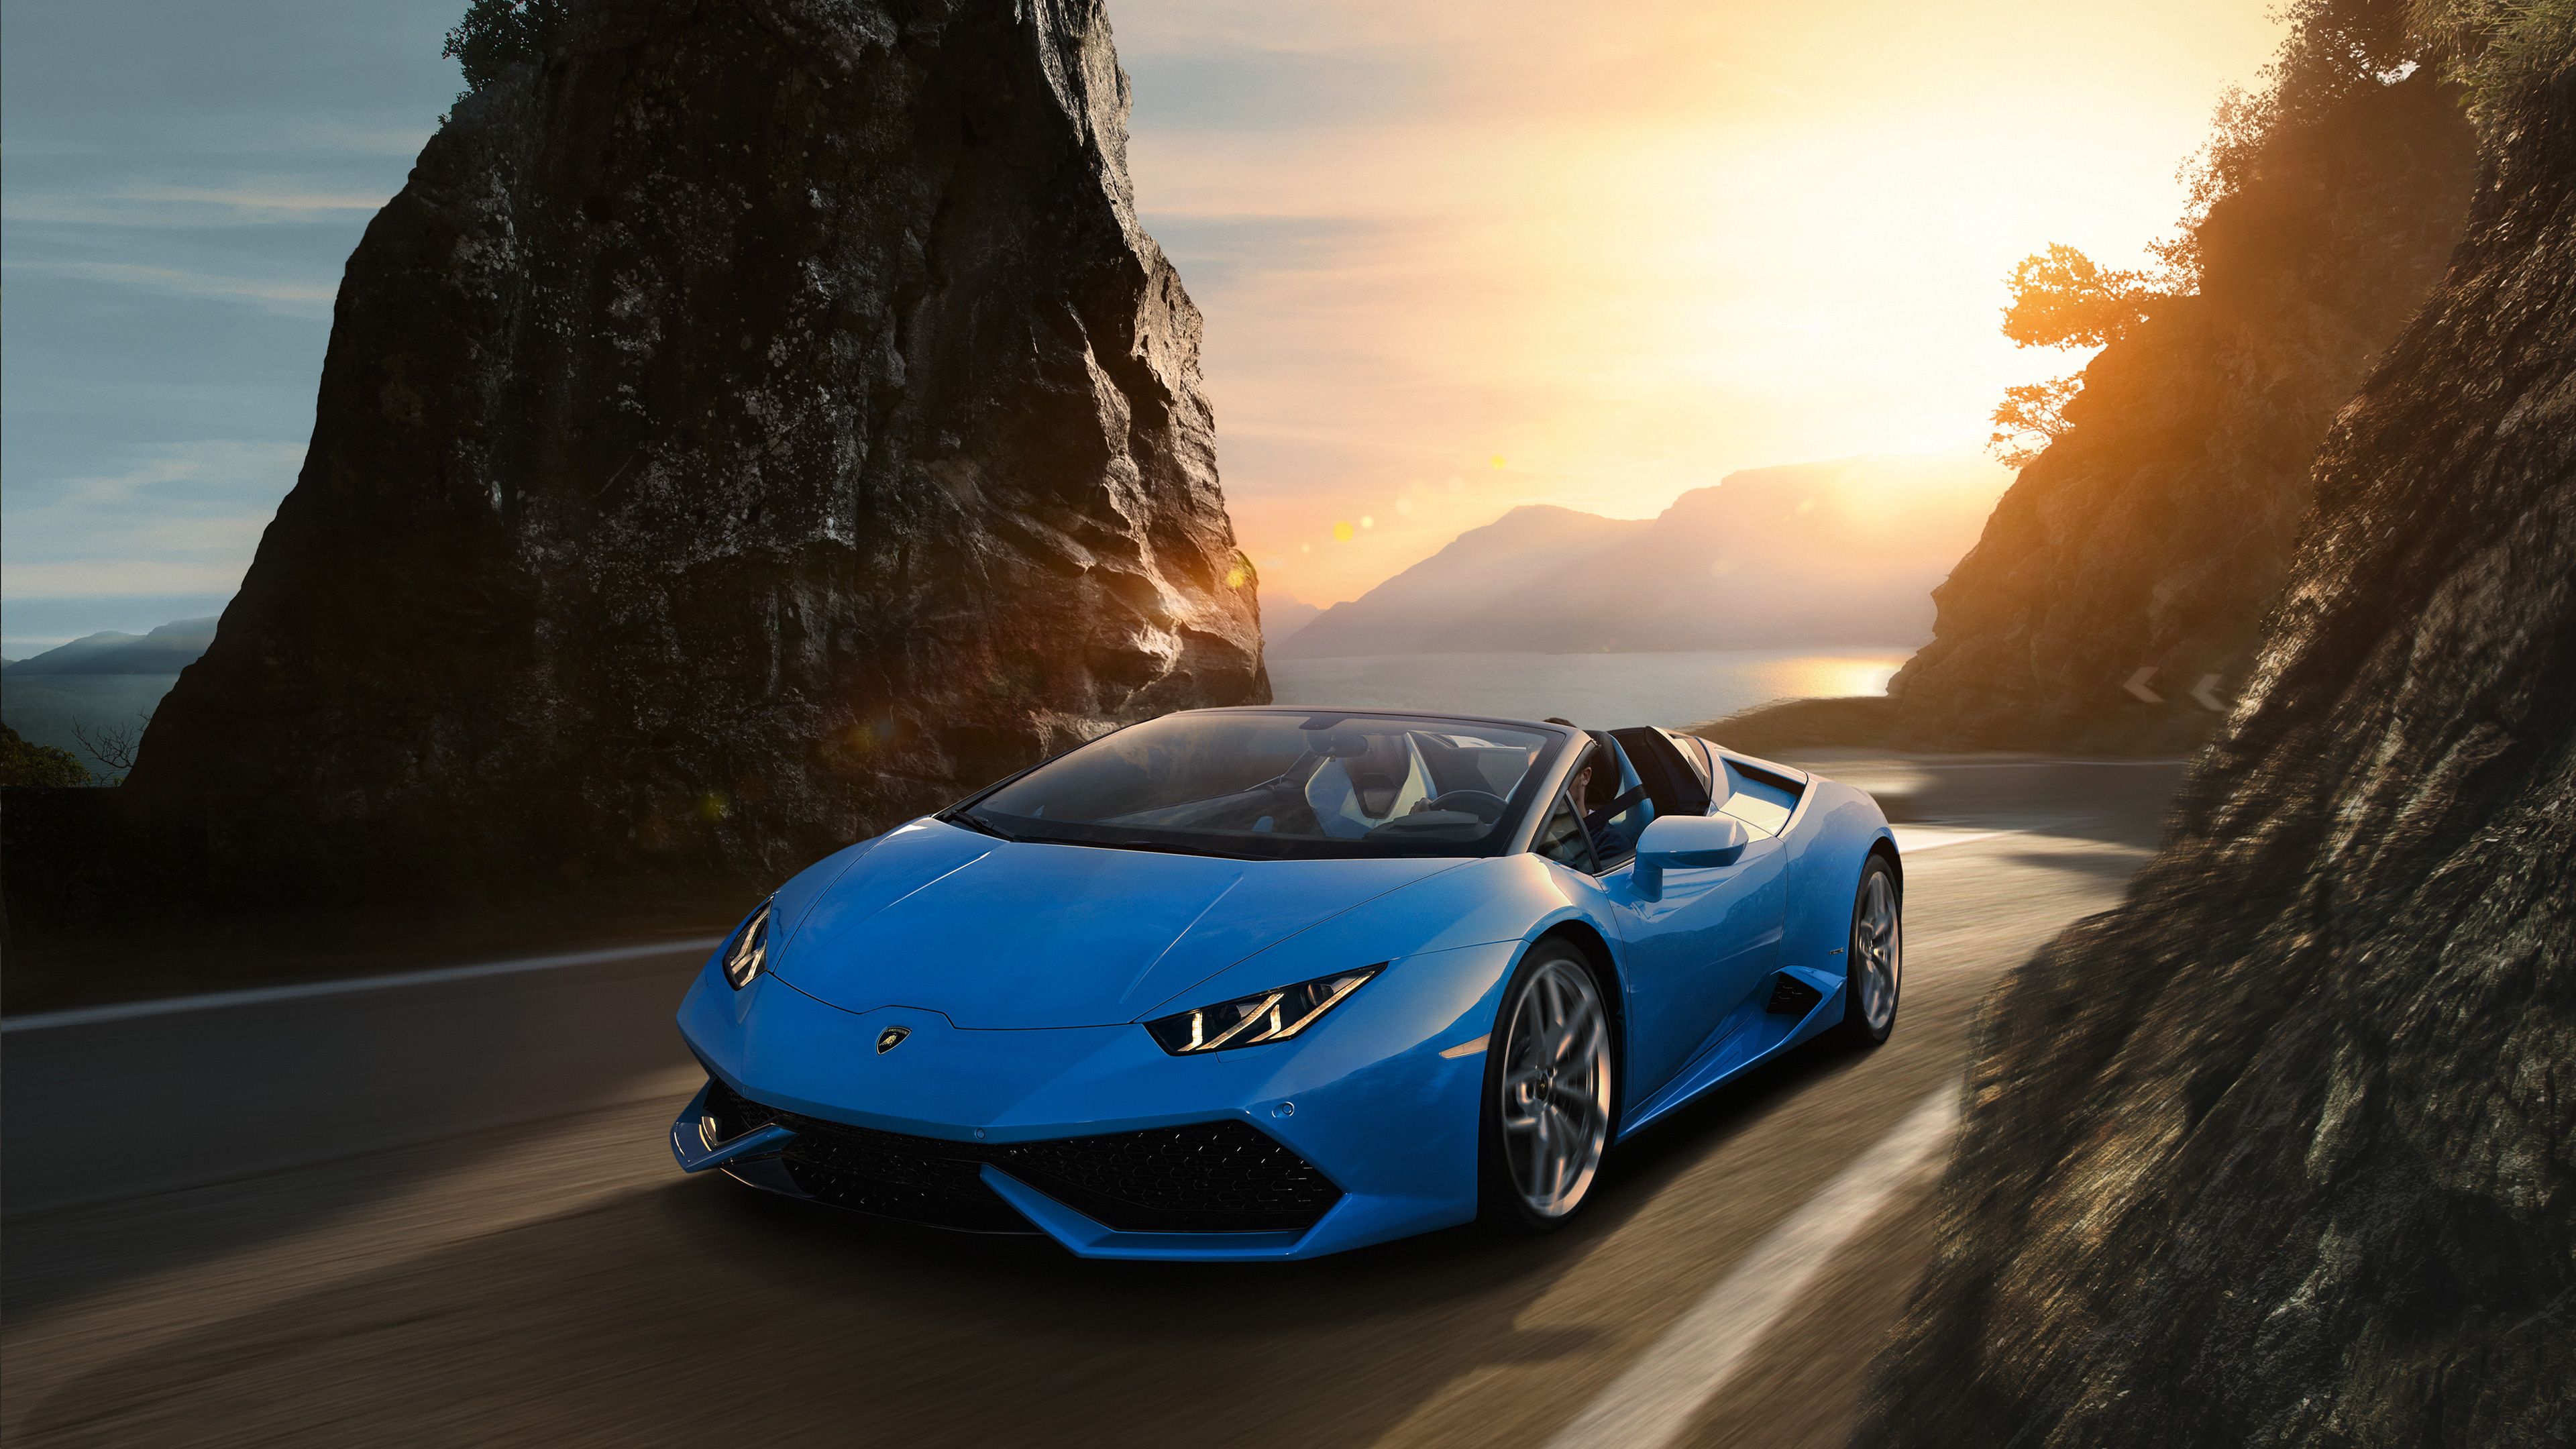 Sky Blue Lamborghini Huracan 4k, HD Cars, 4k Wallpaper, Image, Background, Photo and Picture